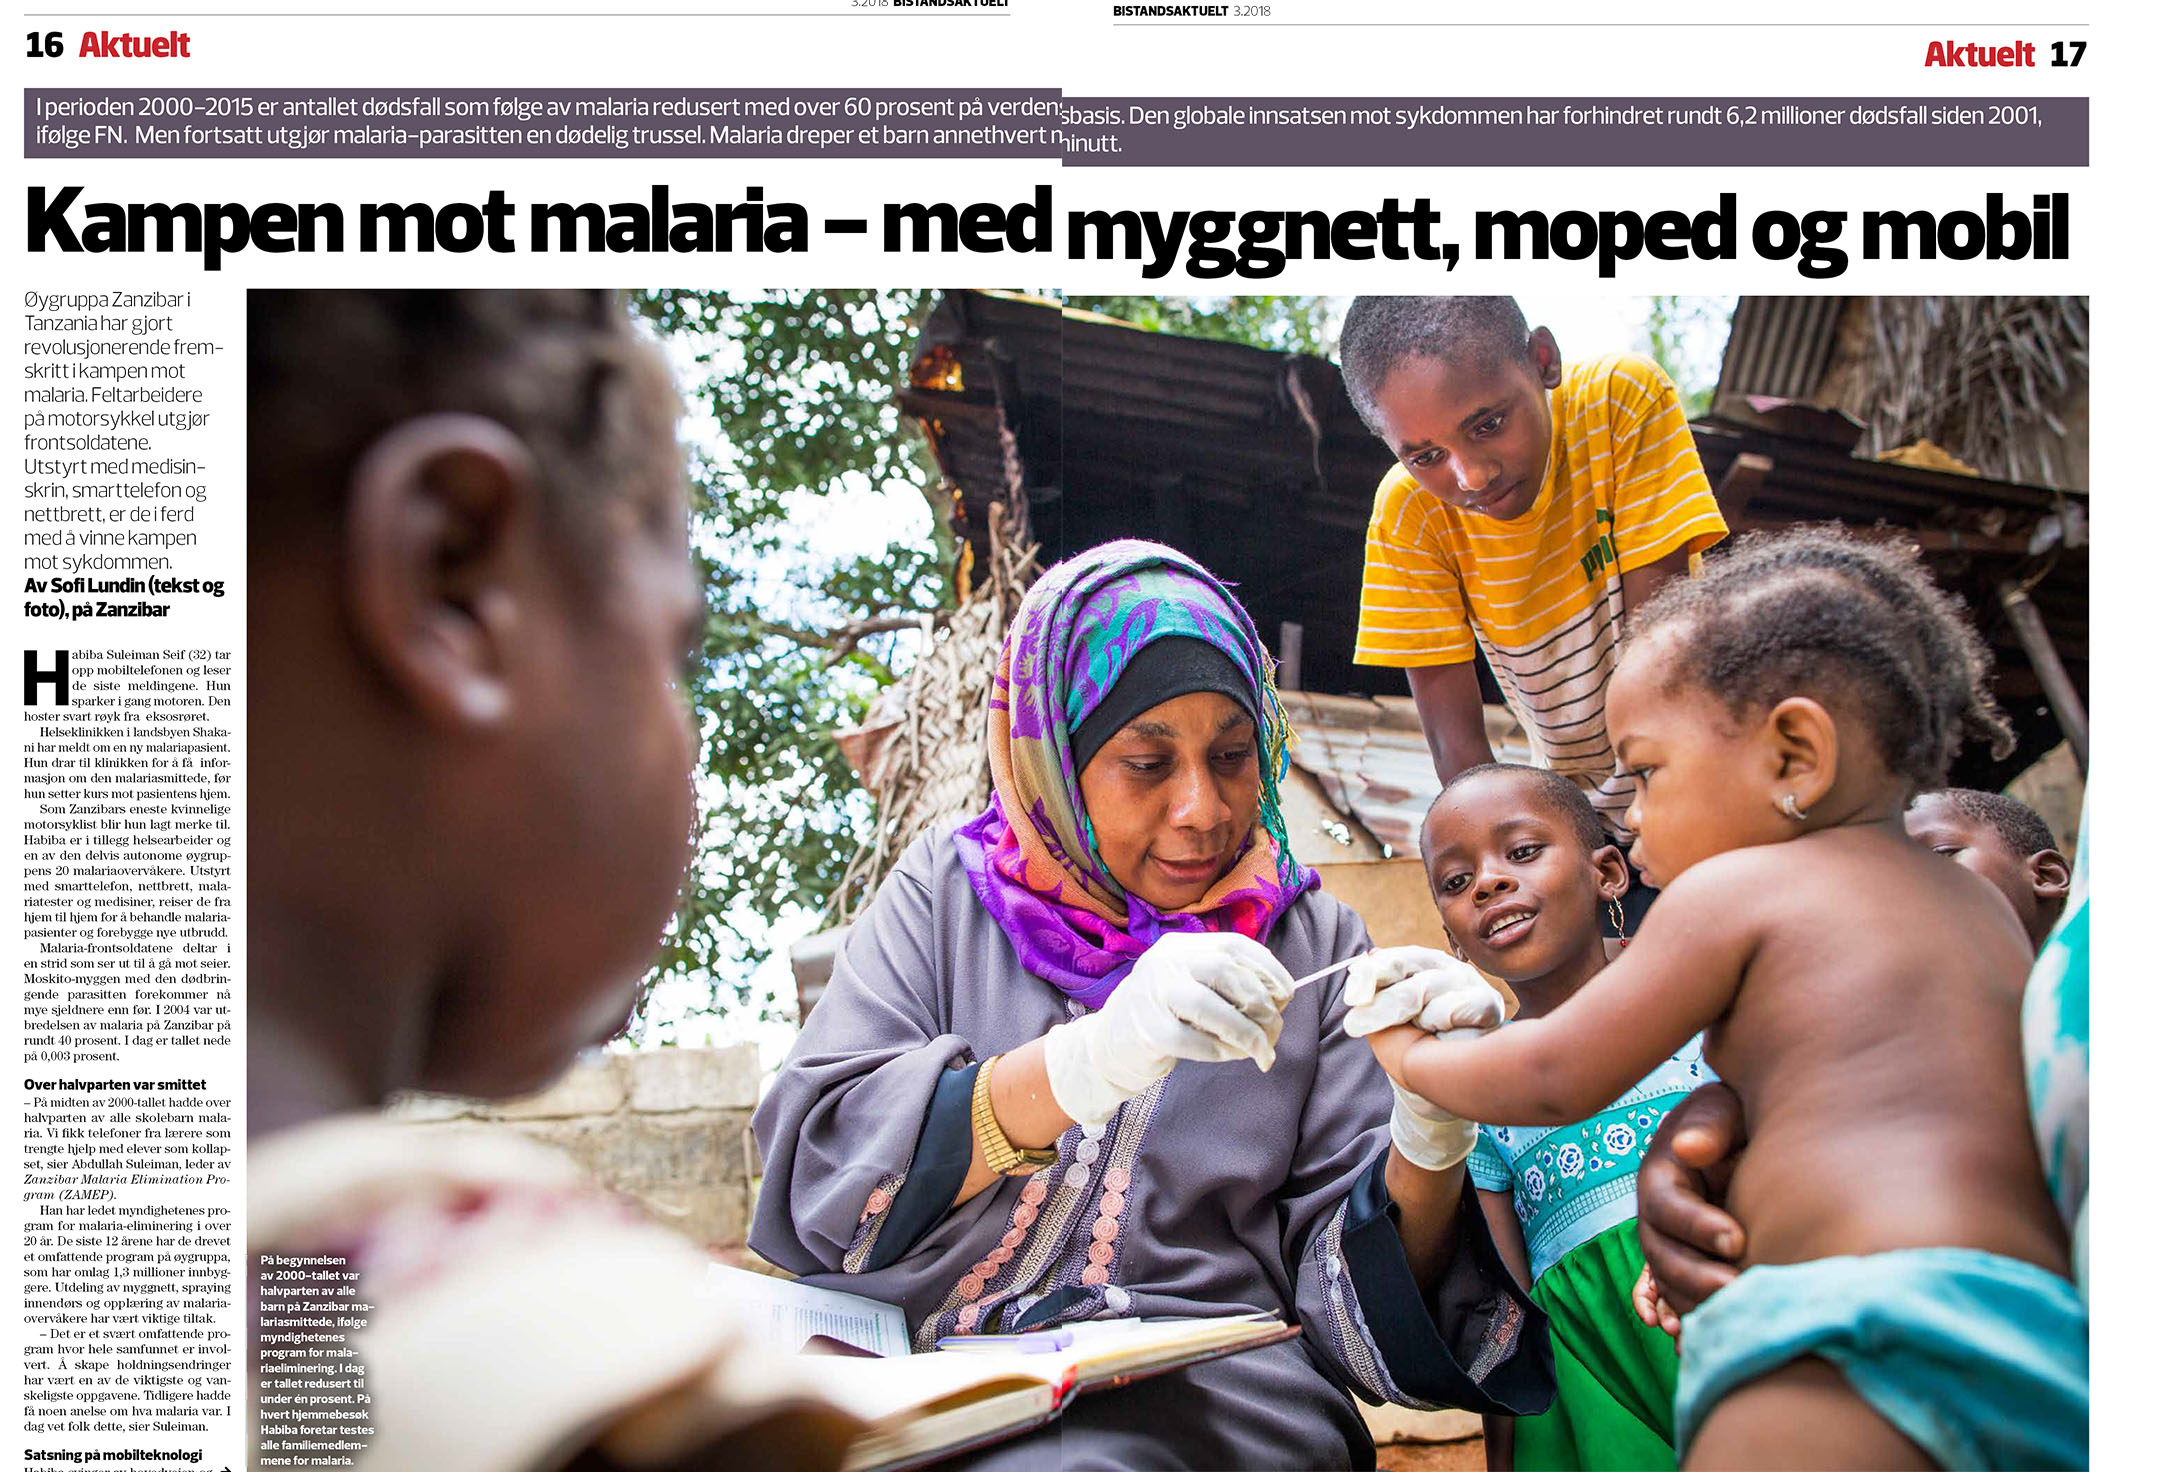 Cover story in Bistandsaktuelt: Zanzibar´s fight to eliminate Malaria